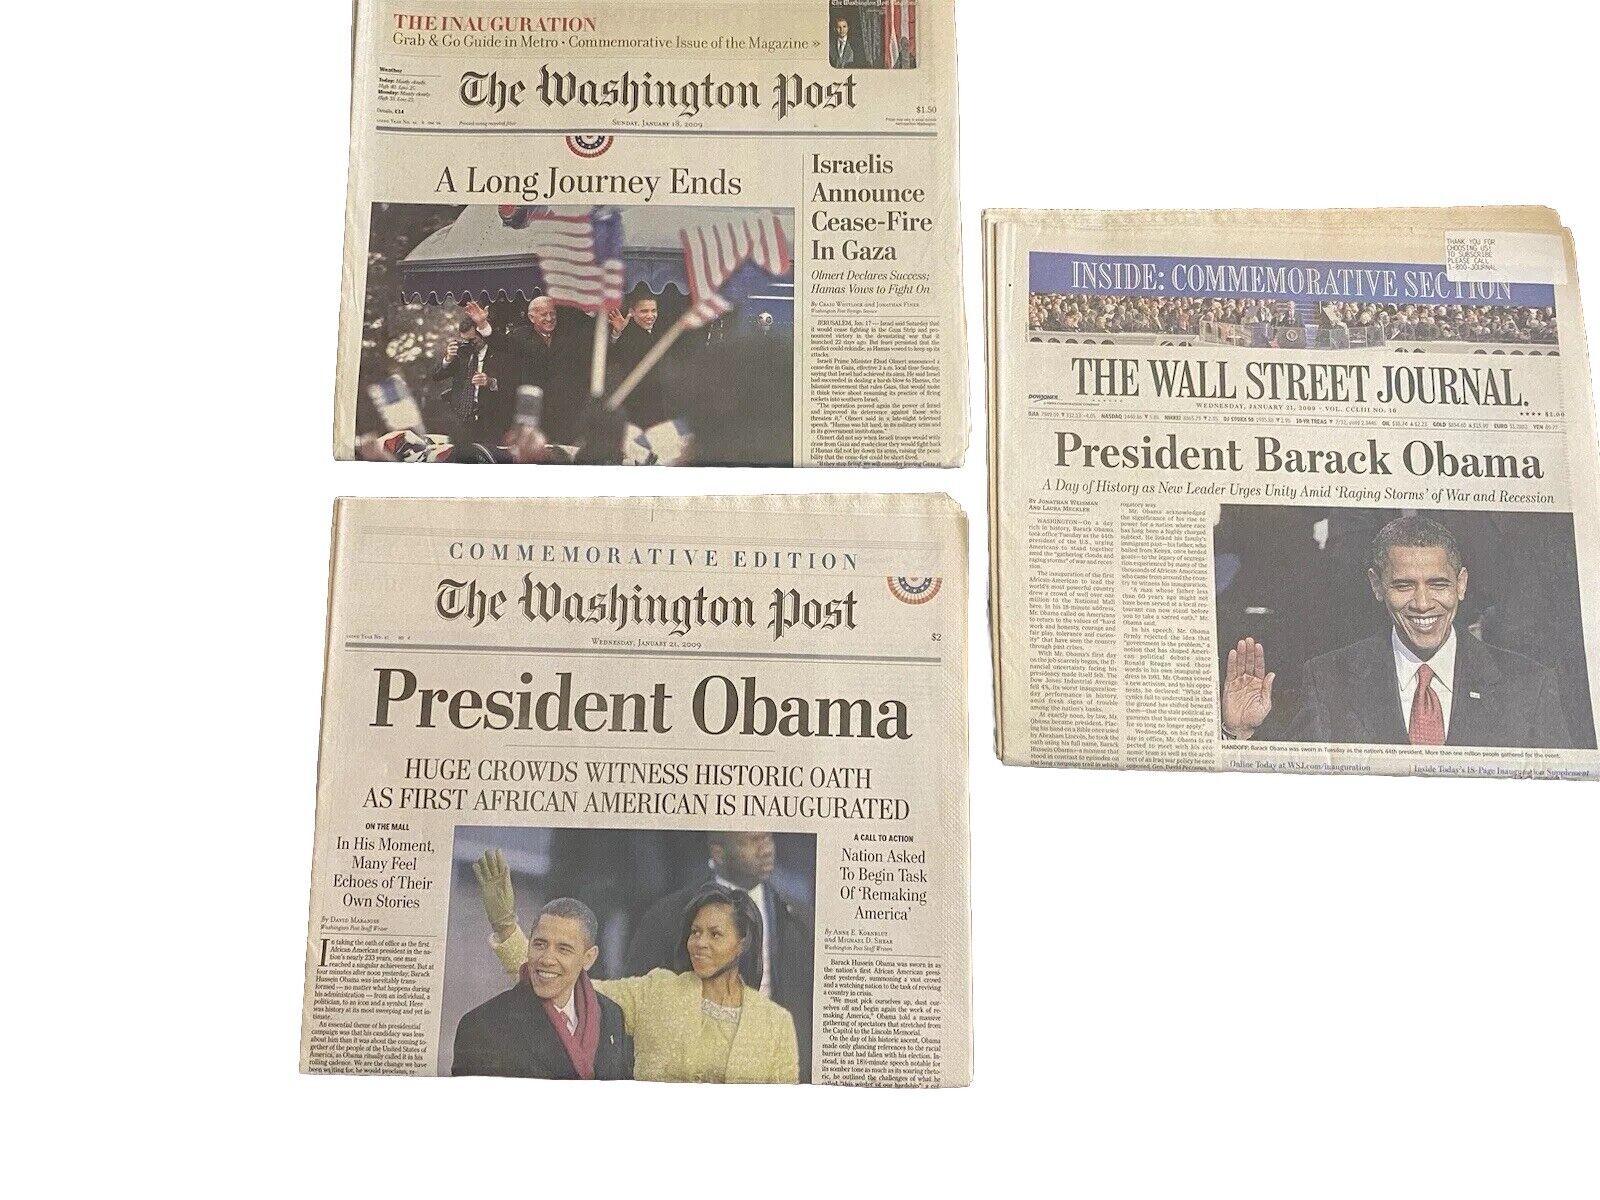  2009 Barack Obama & Joe Biden Inauguration Newspapers - Commemorative Editions 